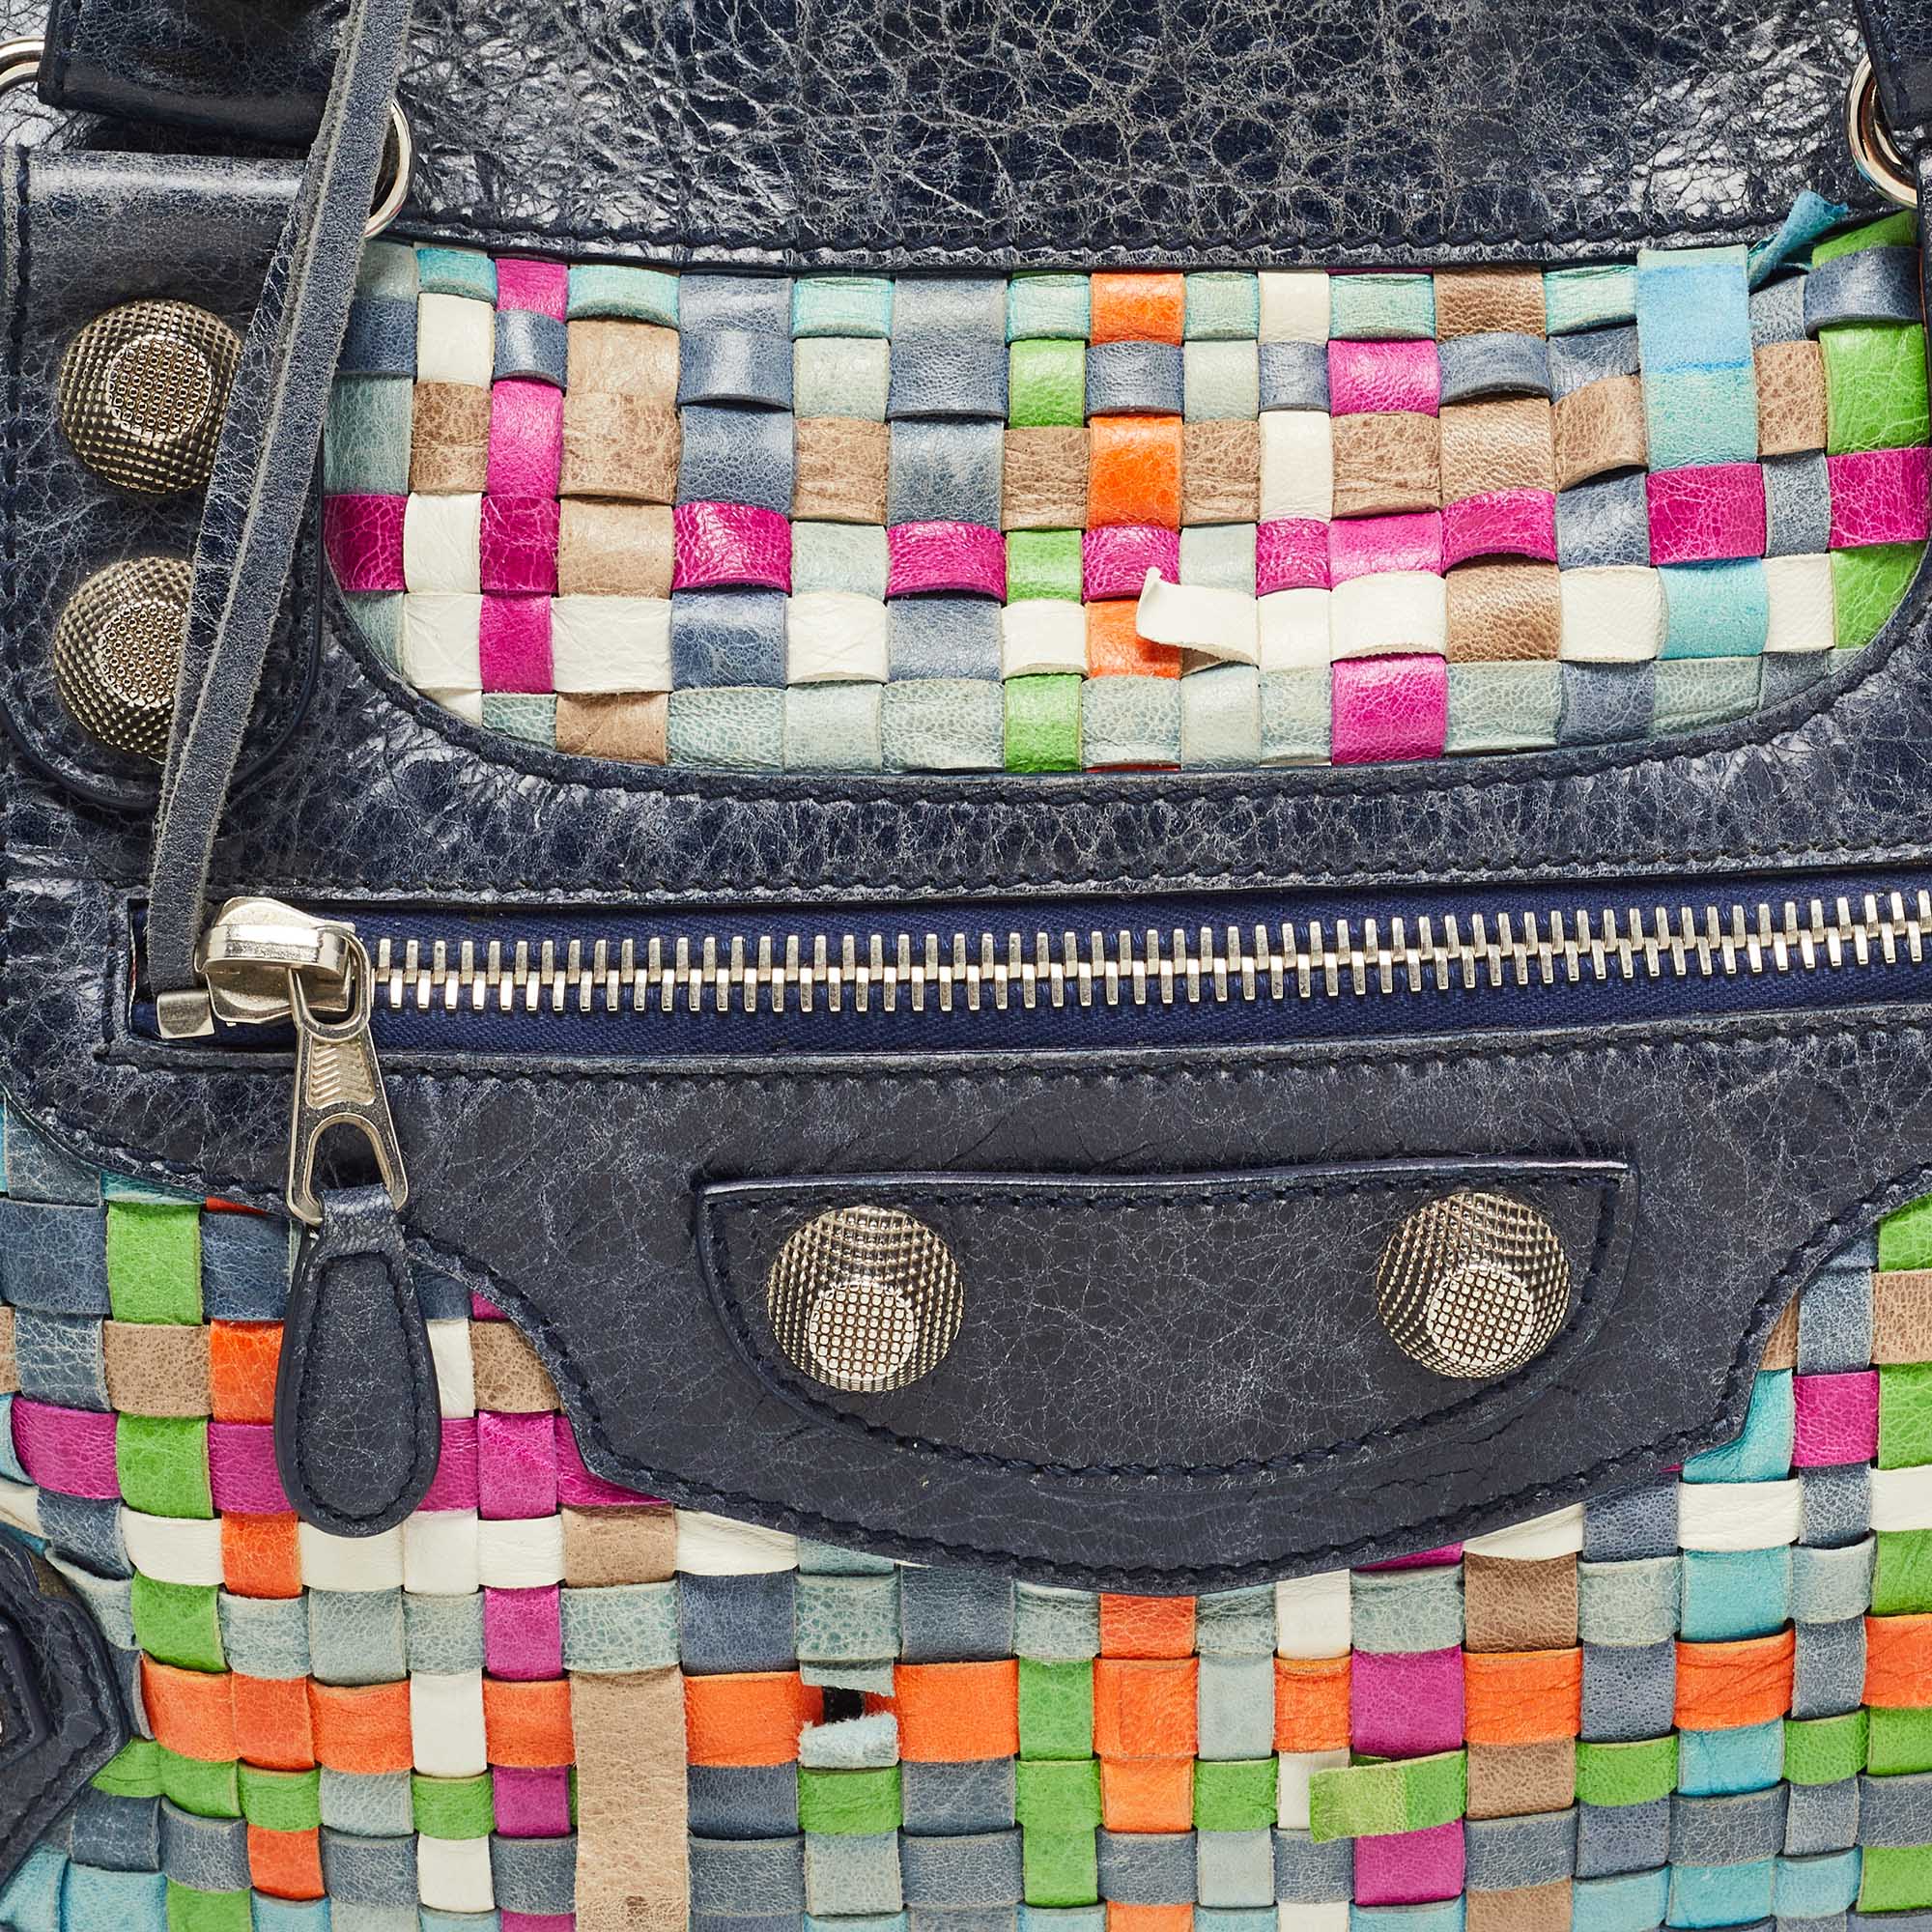 Balenciaga MultiColor Woven Lattice Leather Handbag Purse Shoulder Bag   eBay